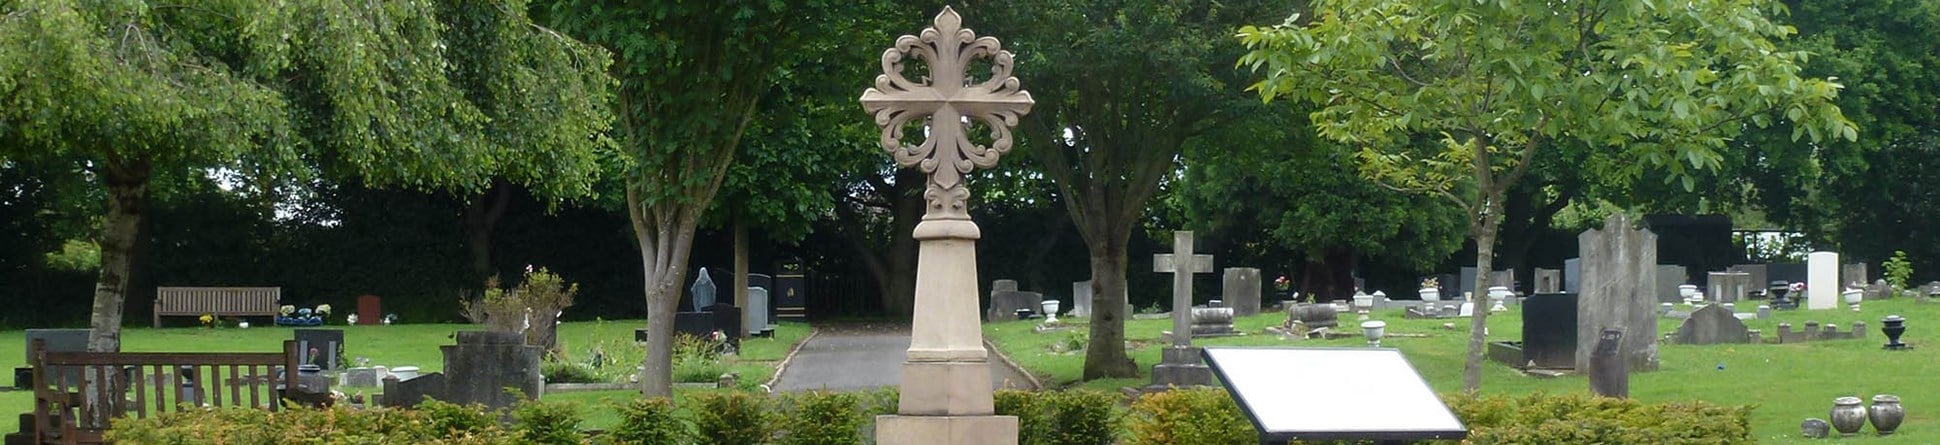 Amington Cemetery War Memorial, Tamworth